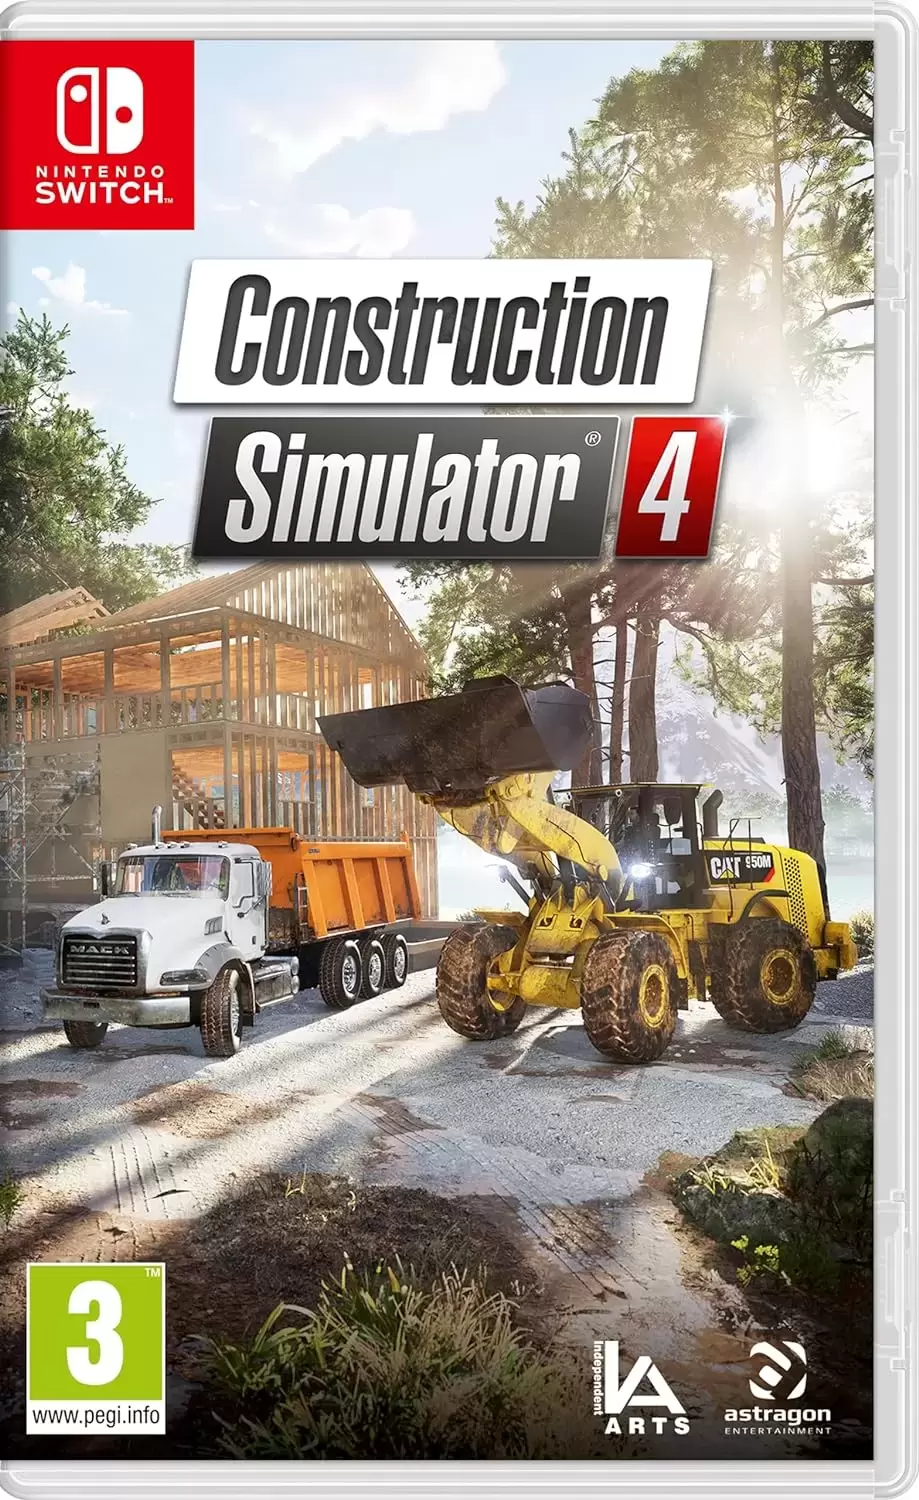 Nintendo Switch Games - Construction Simulator 4